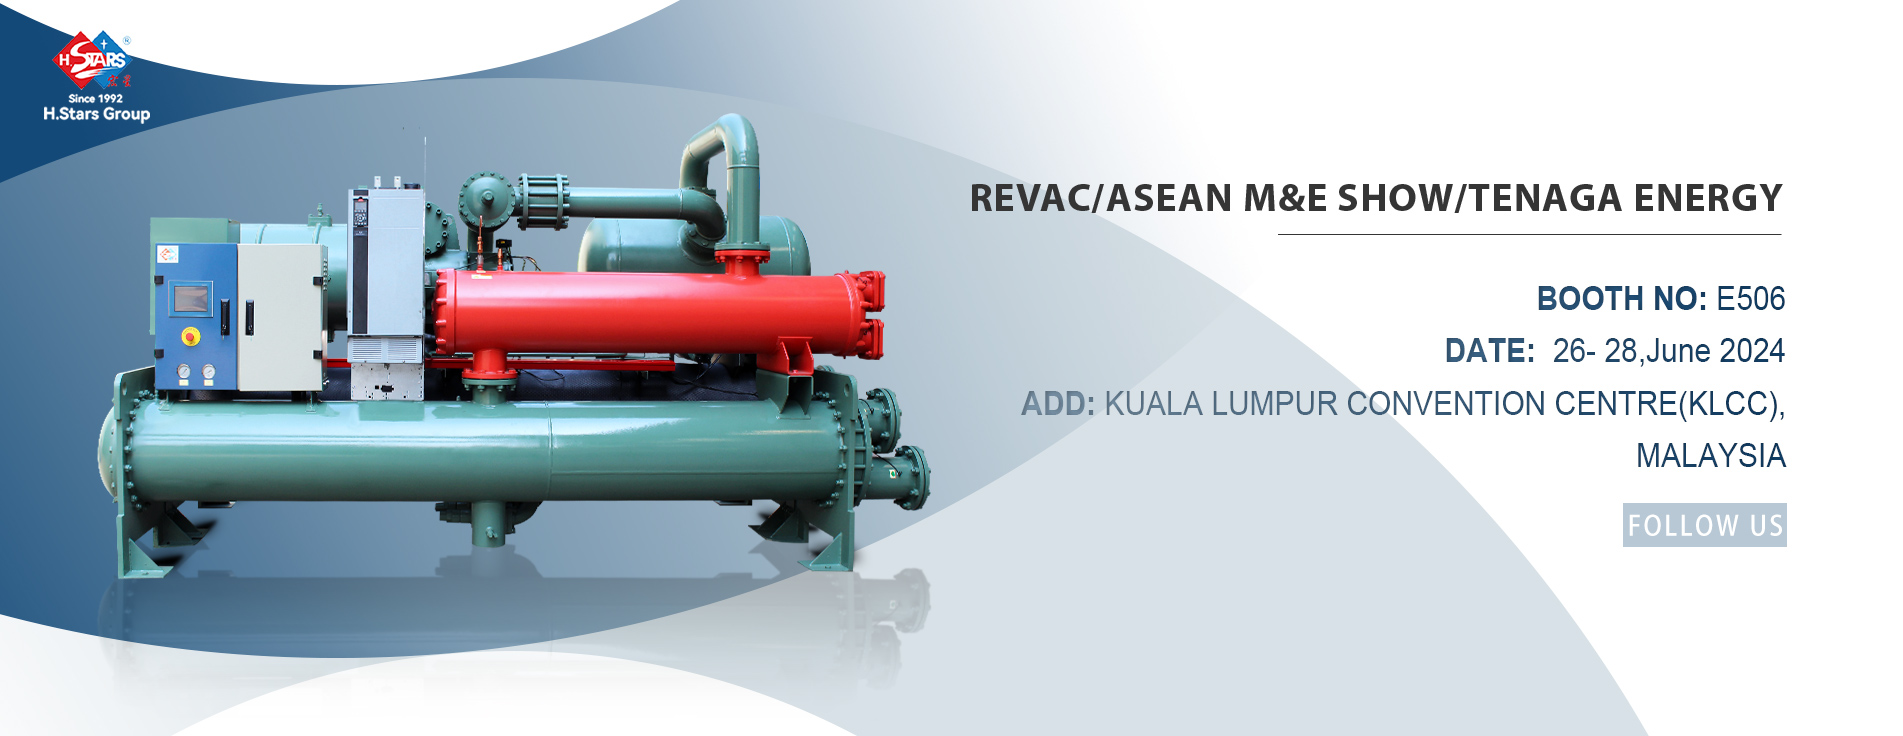 REVAC/ASEAN M&E SHOW/TENAGA ENERGY